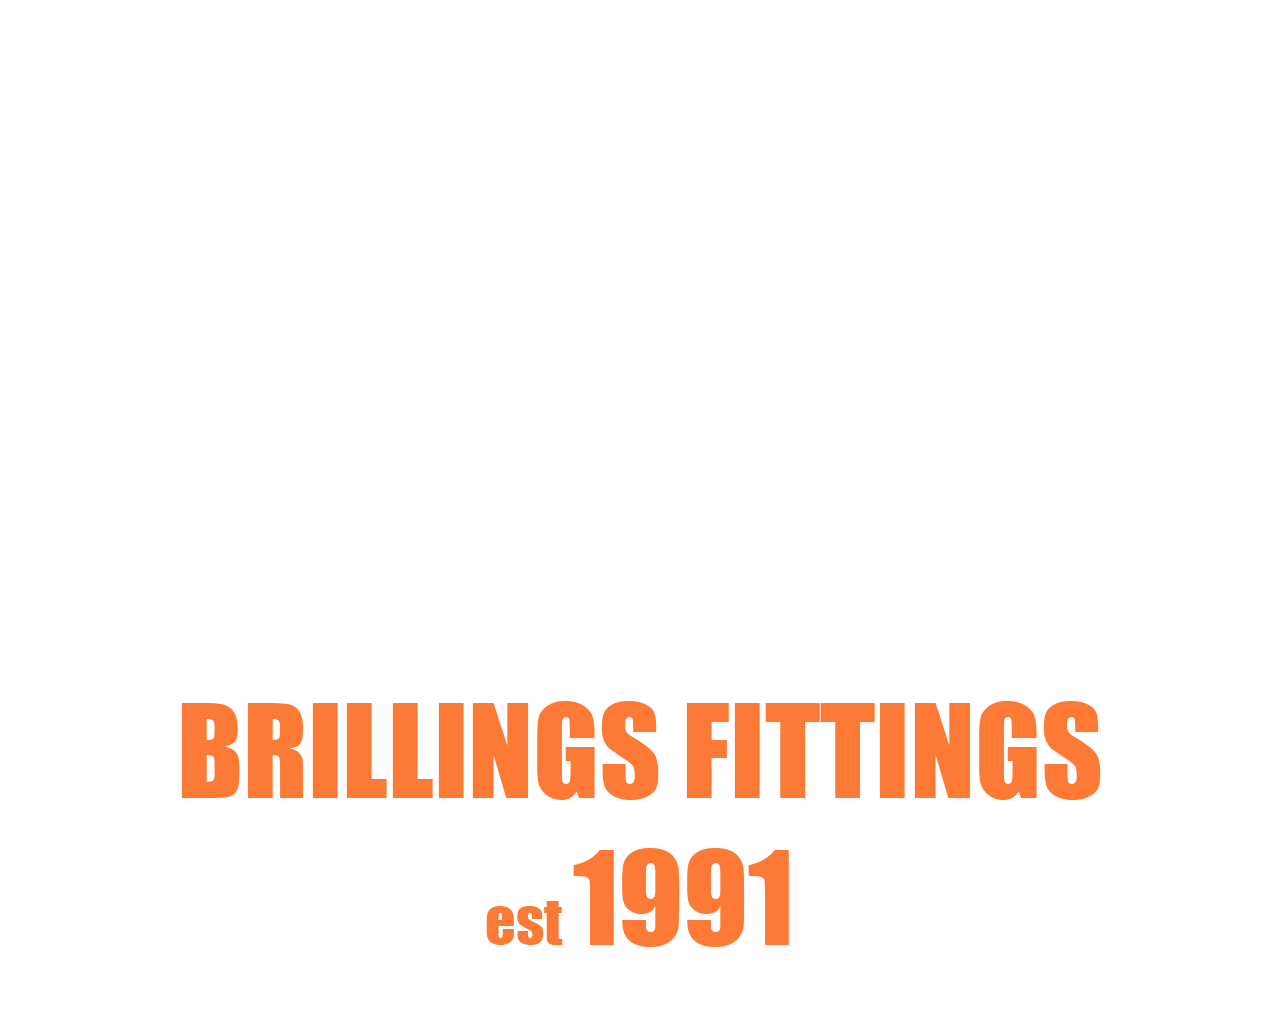 Billings Fittings animated logo